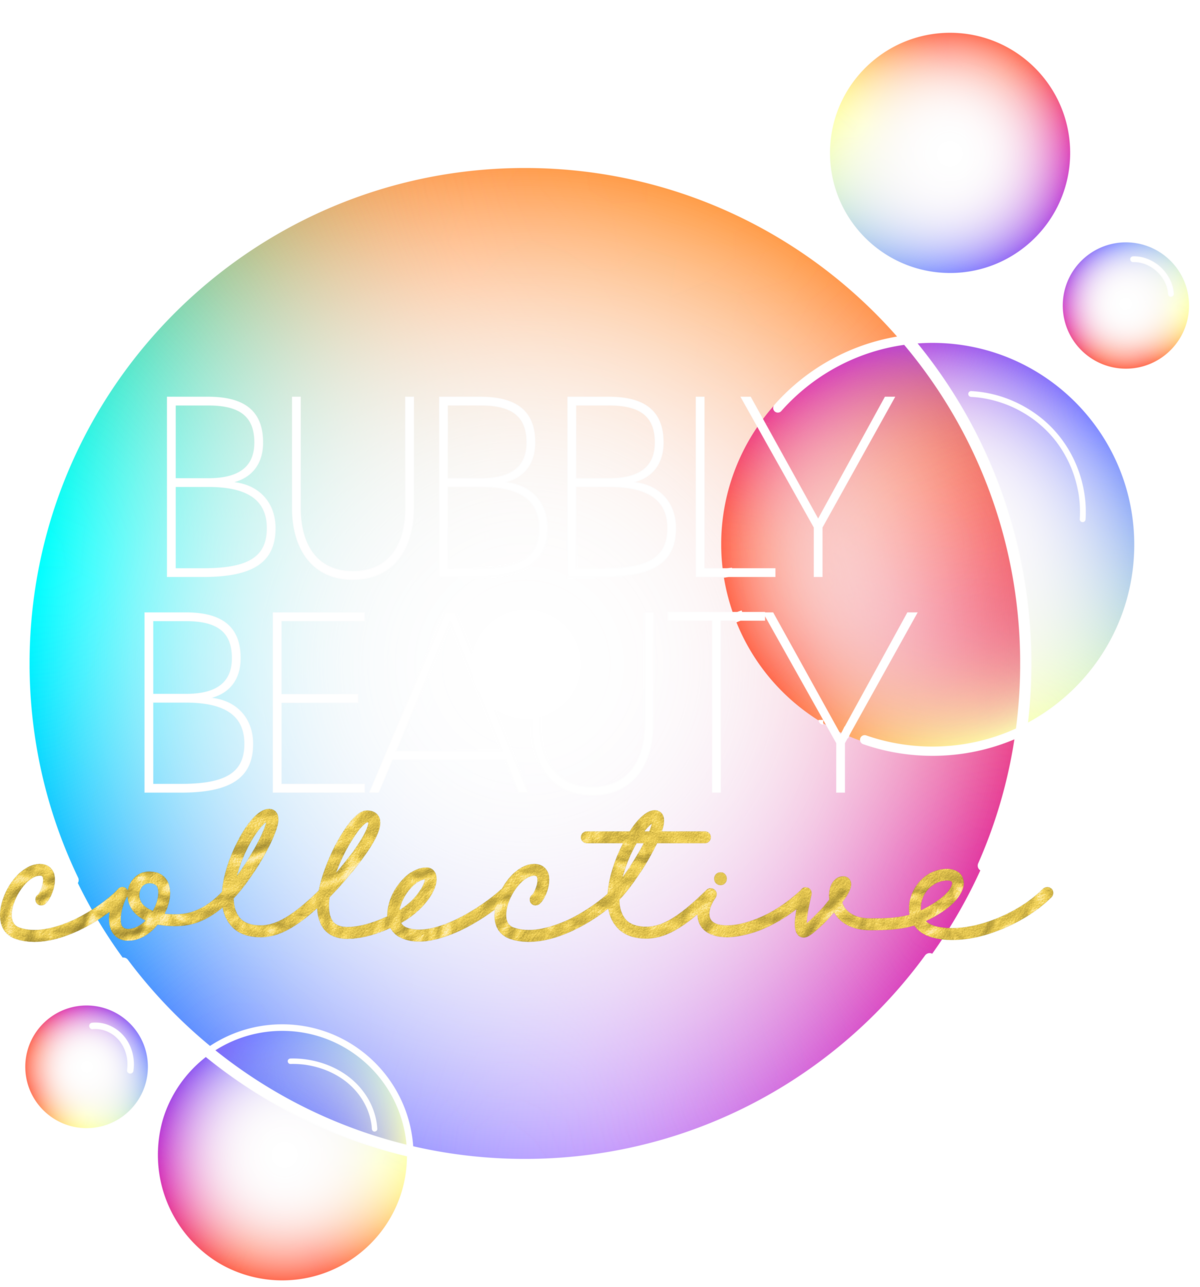 Beauty and Bubbly 